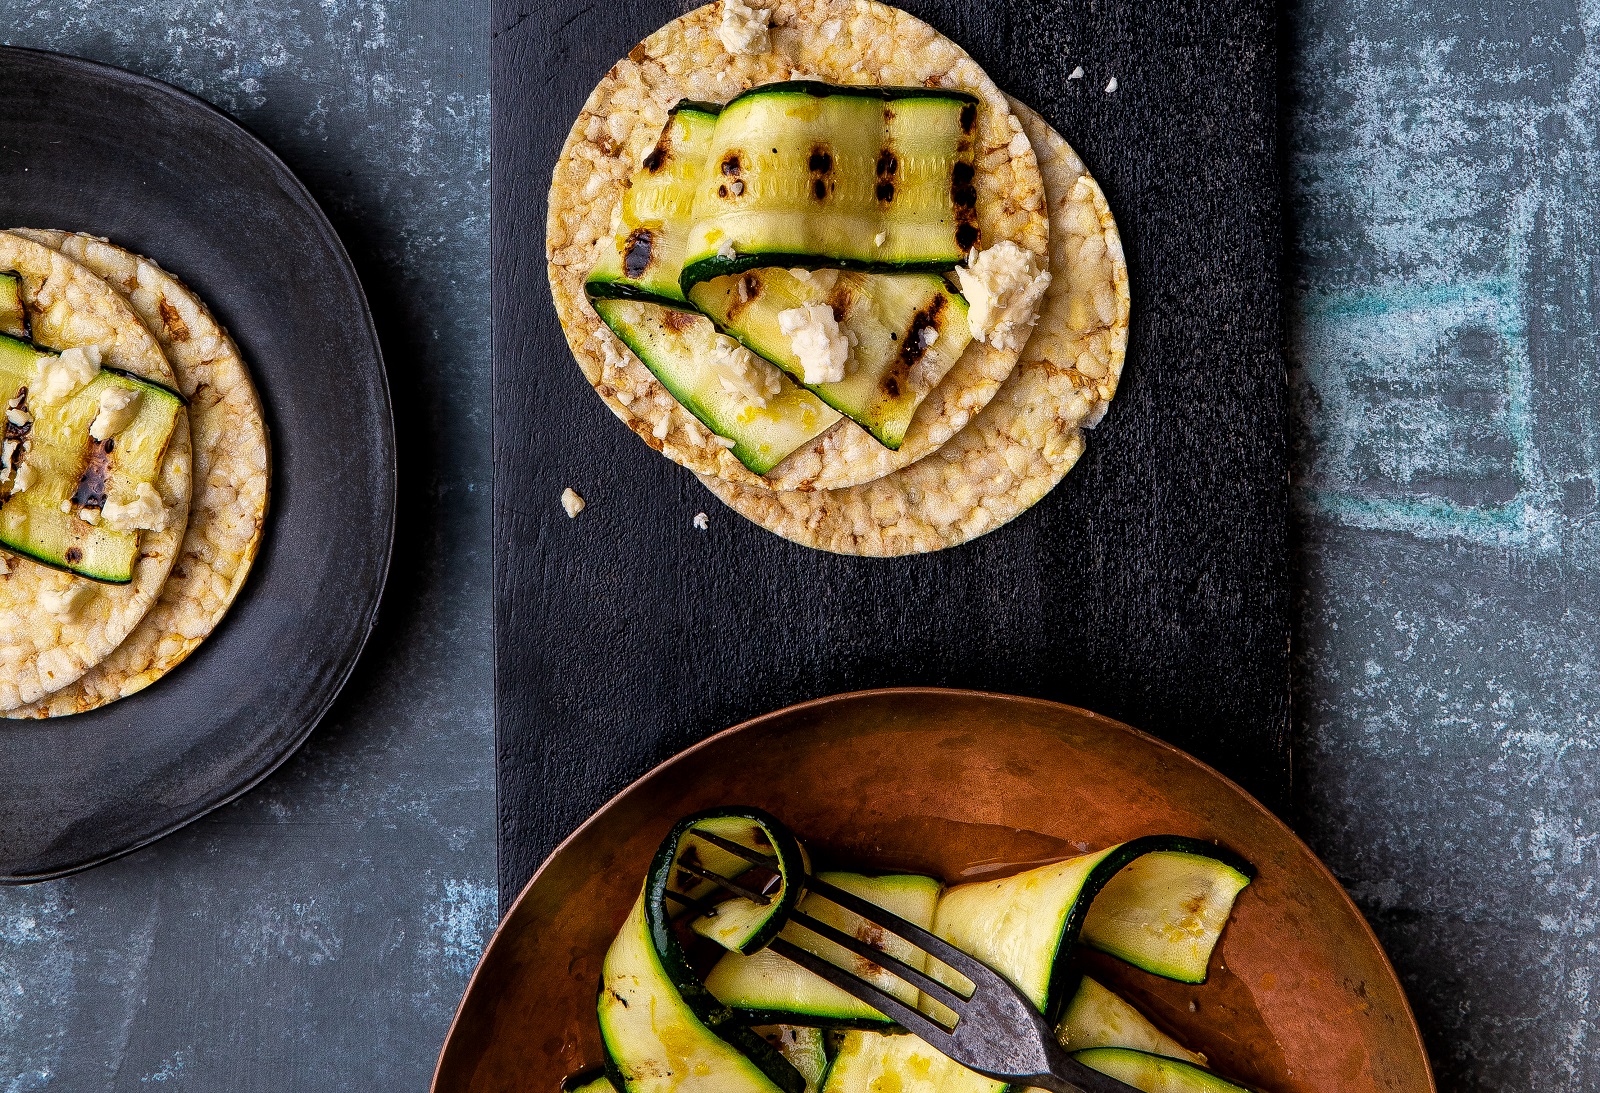 Grilled Zucchini, Lemon Oil & Feta on CORN THINS slices. Vegetarian & Gluten free